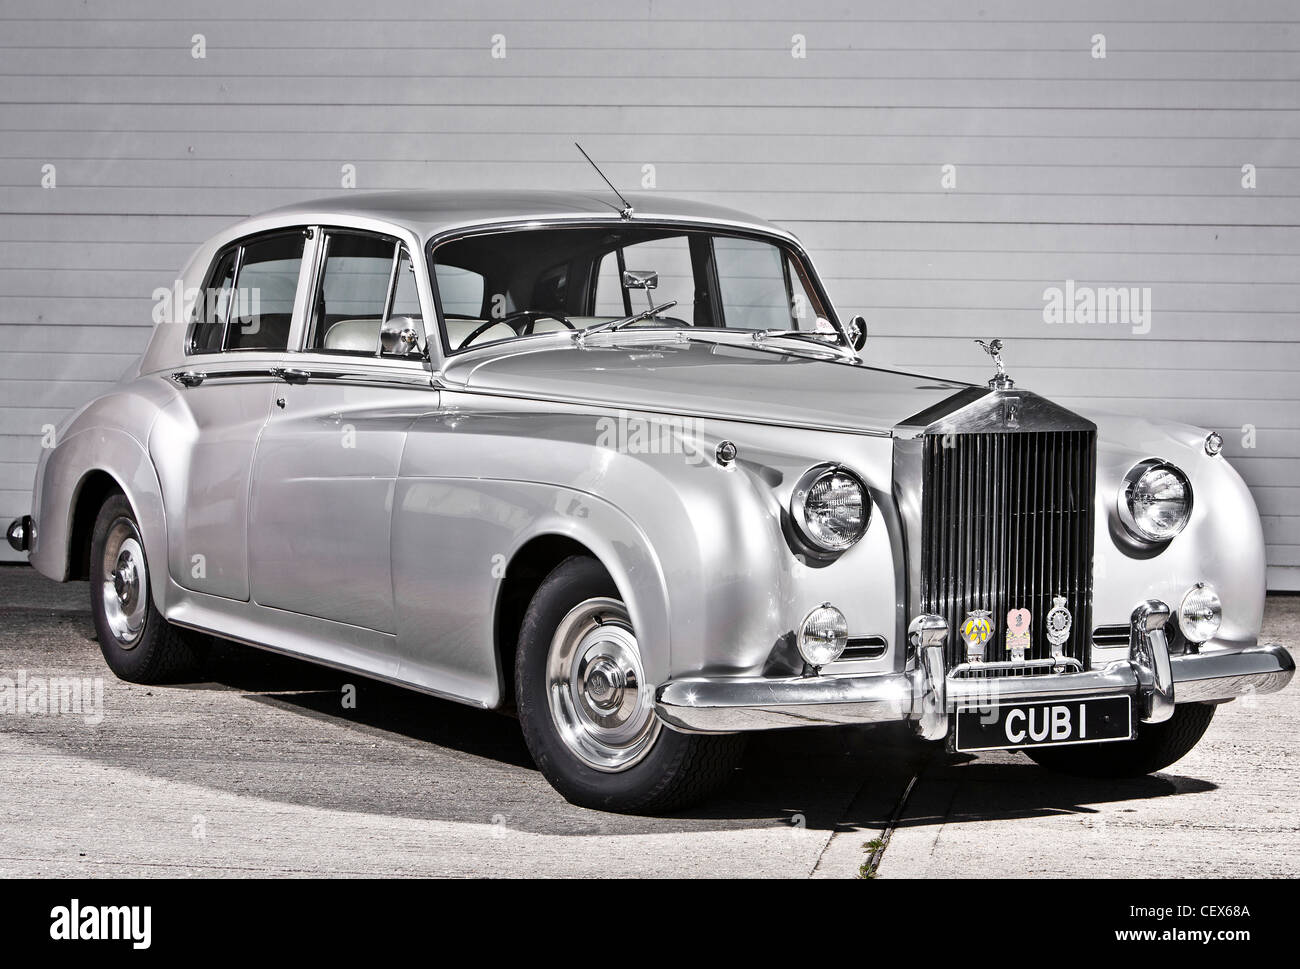 Stationary Rolls Royce, James Bond classic car Stock Photo